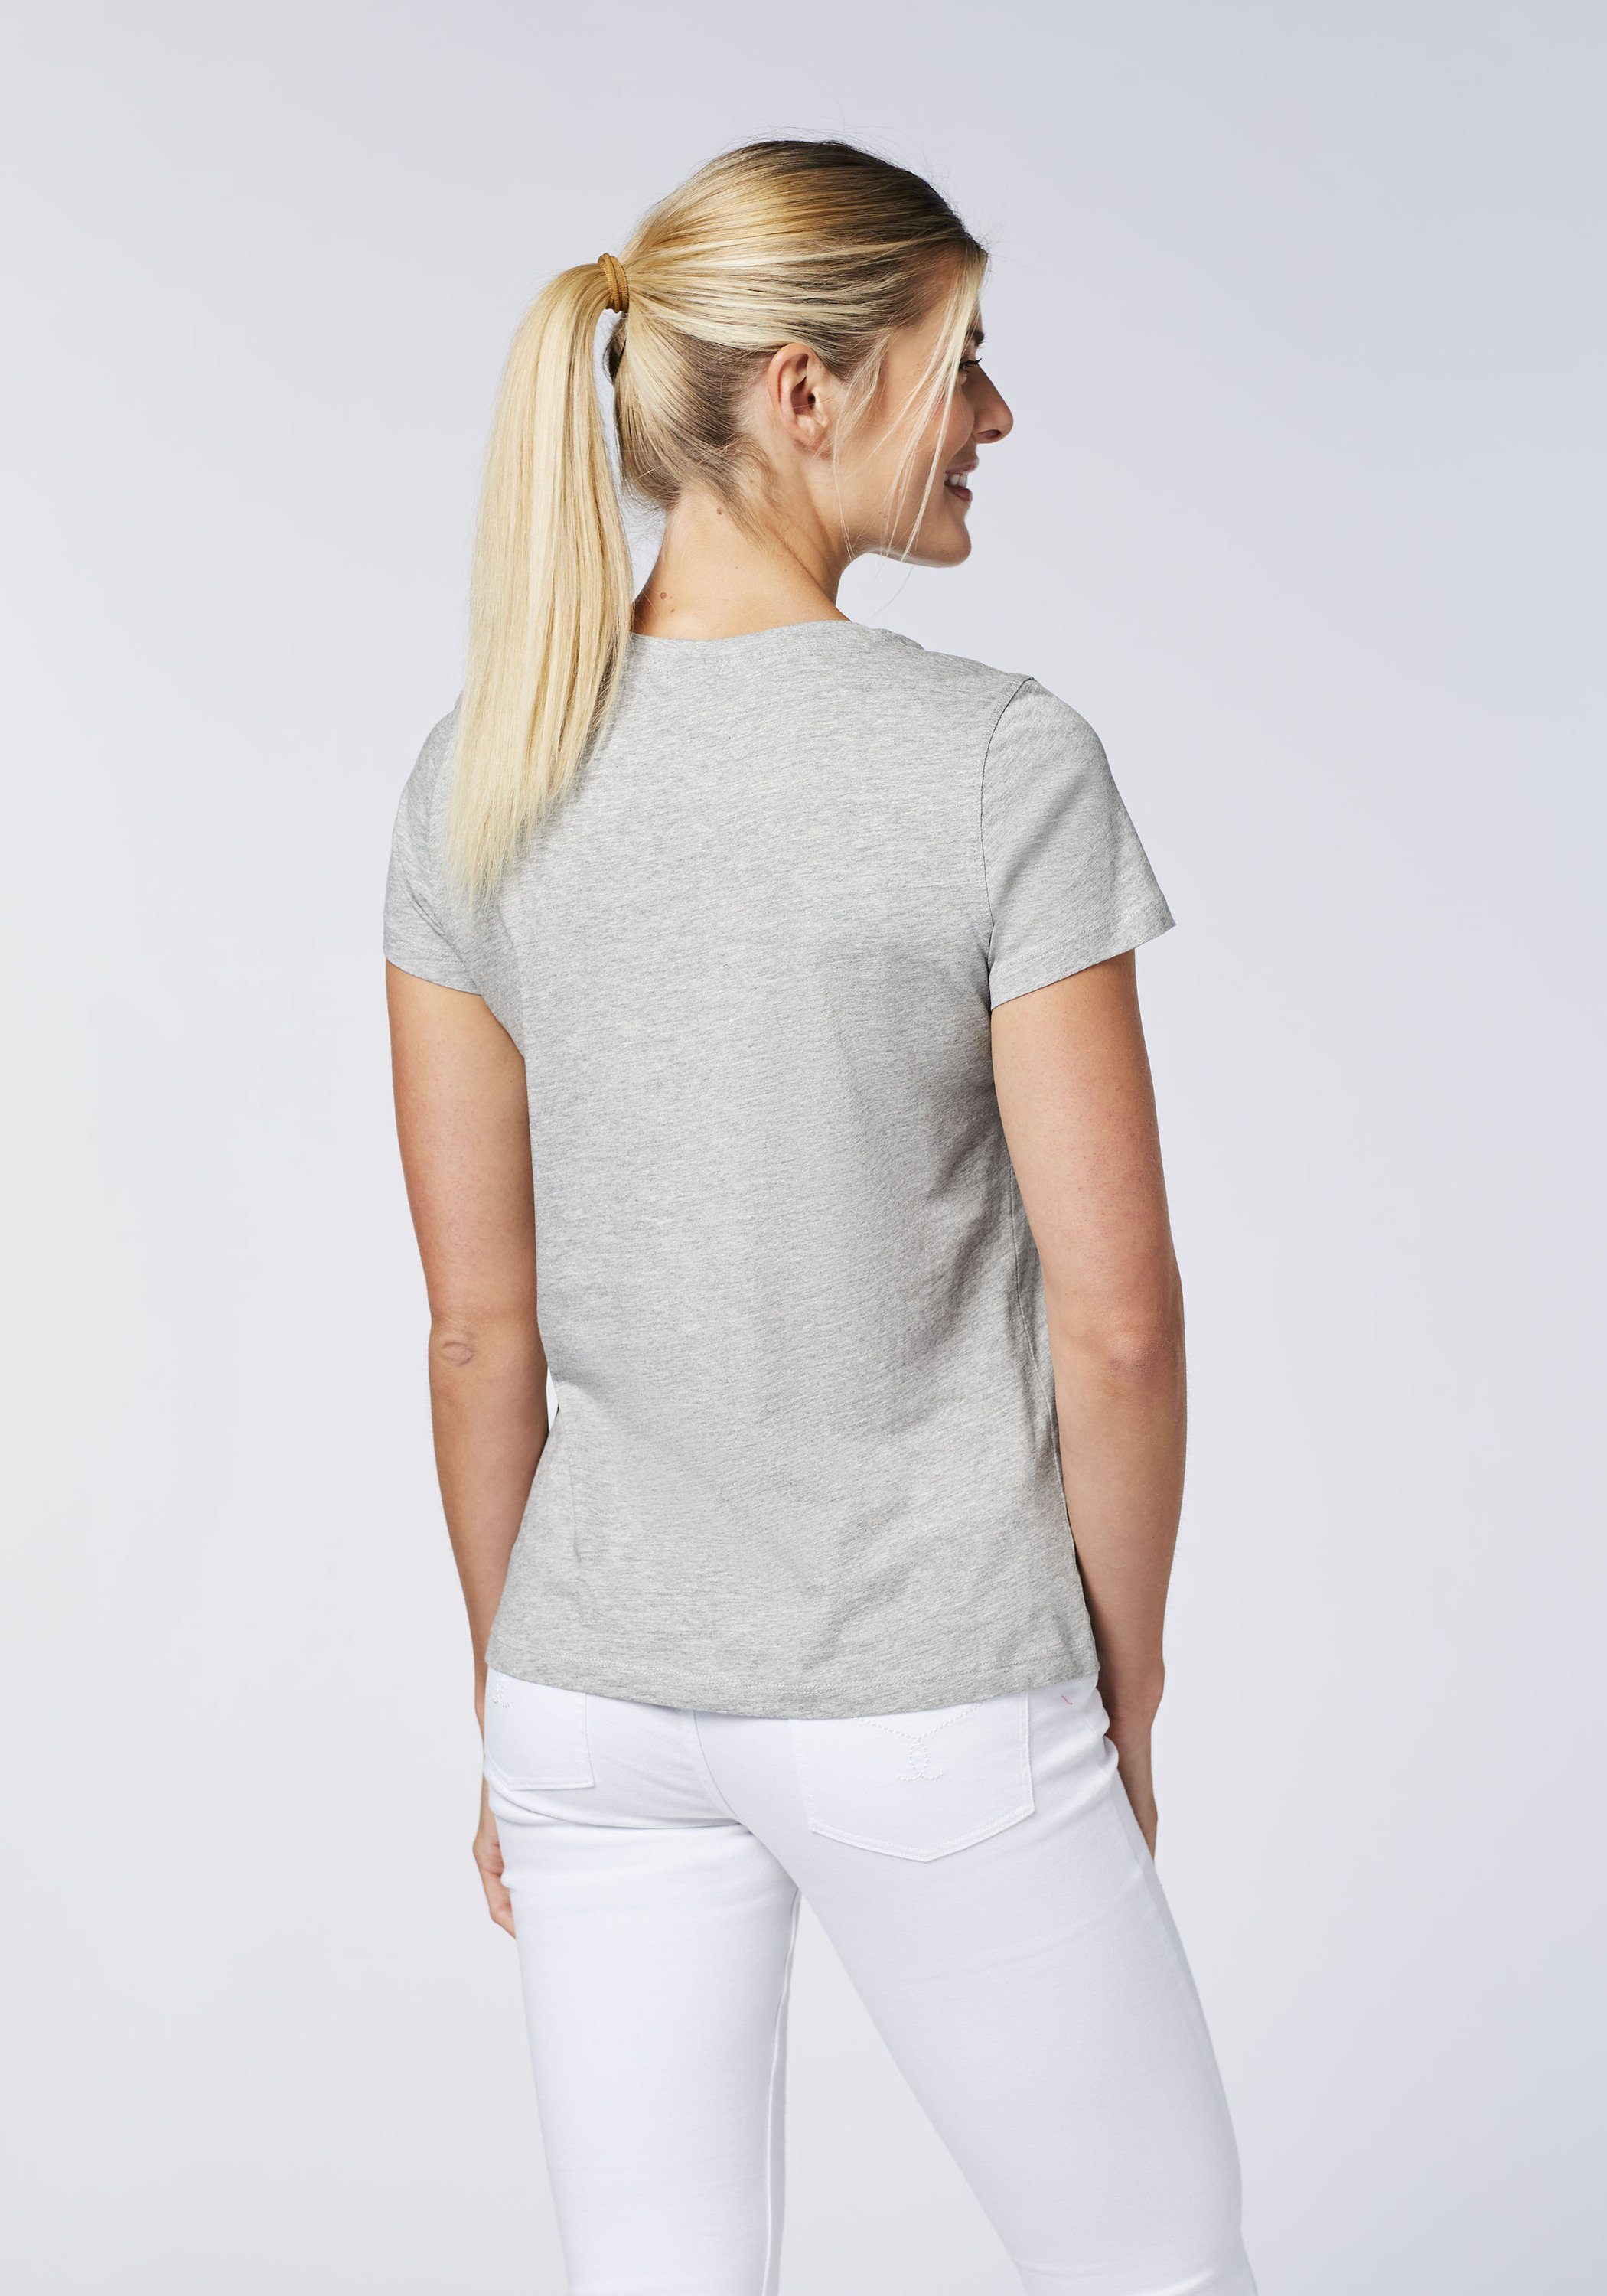 T-Shirt Neutral Sylt Melange Gray mit Strasssteinen edlen 17-4402M Polo